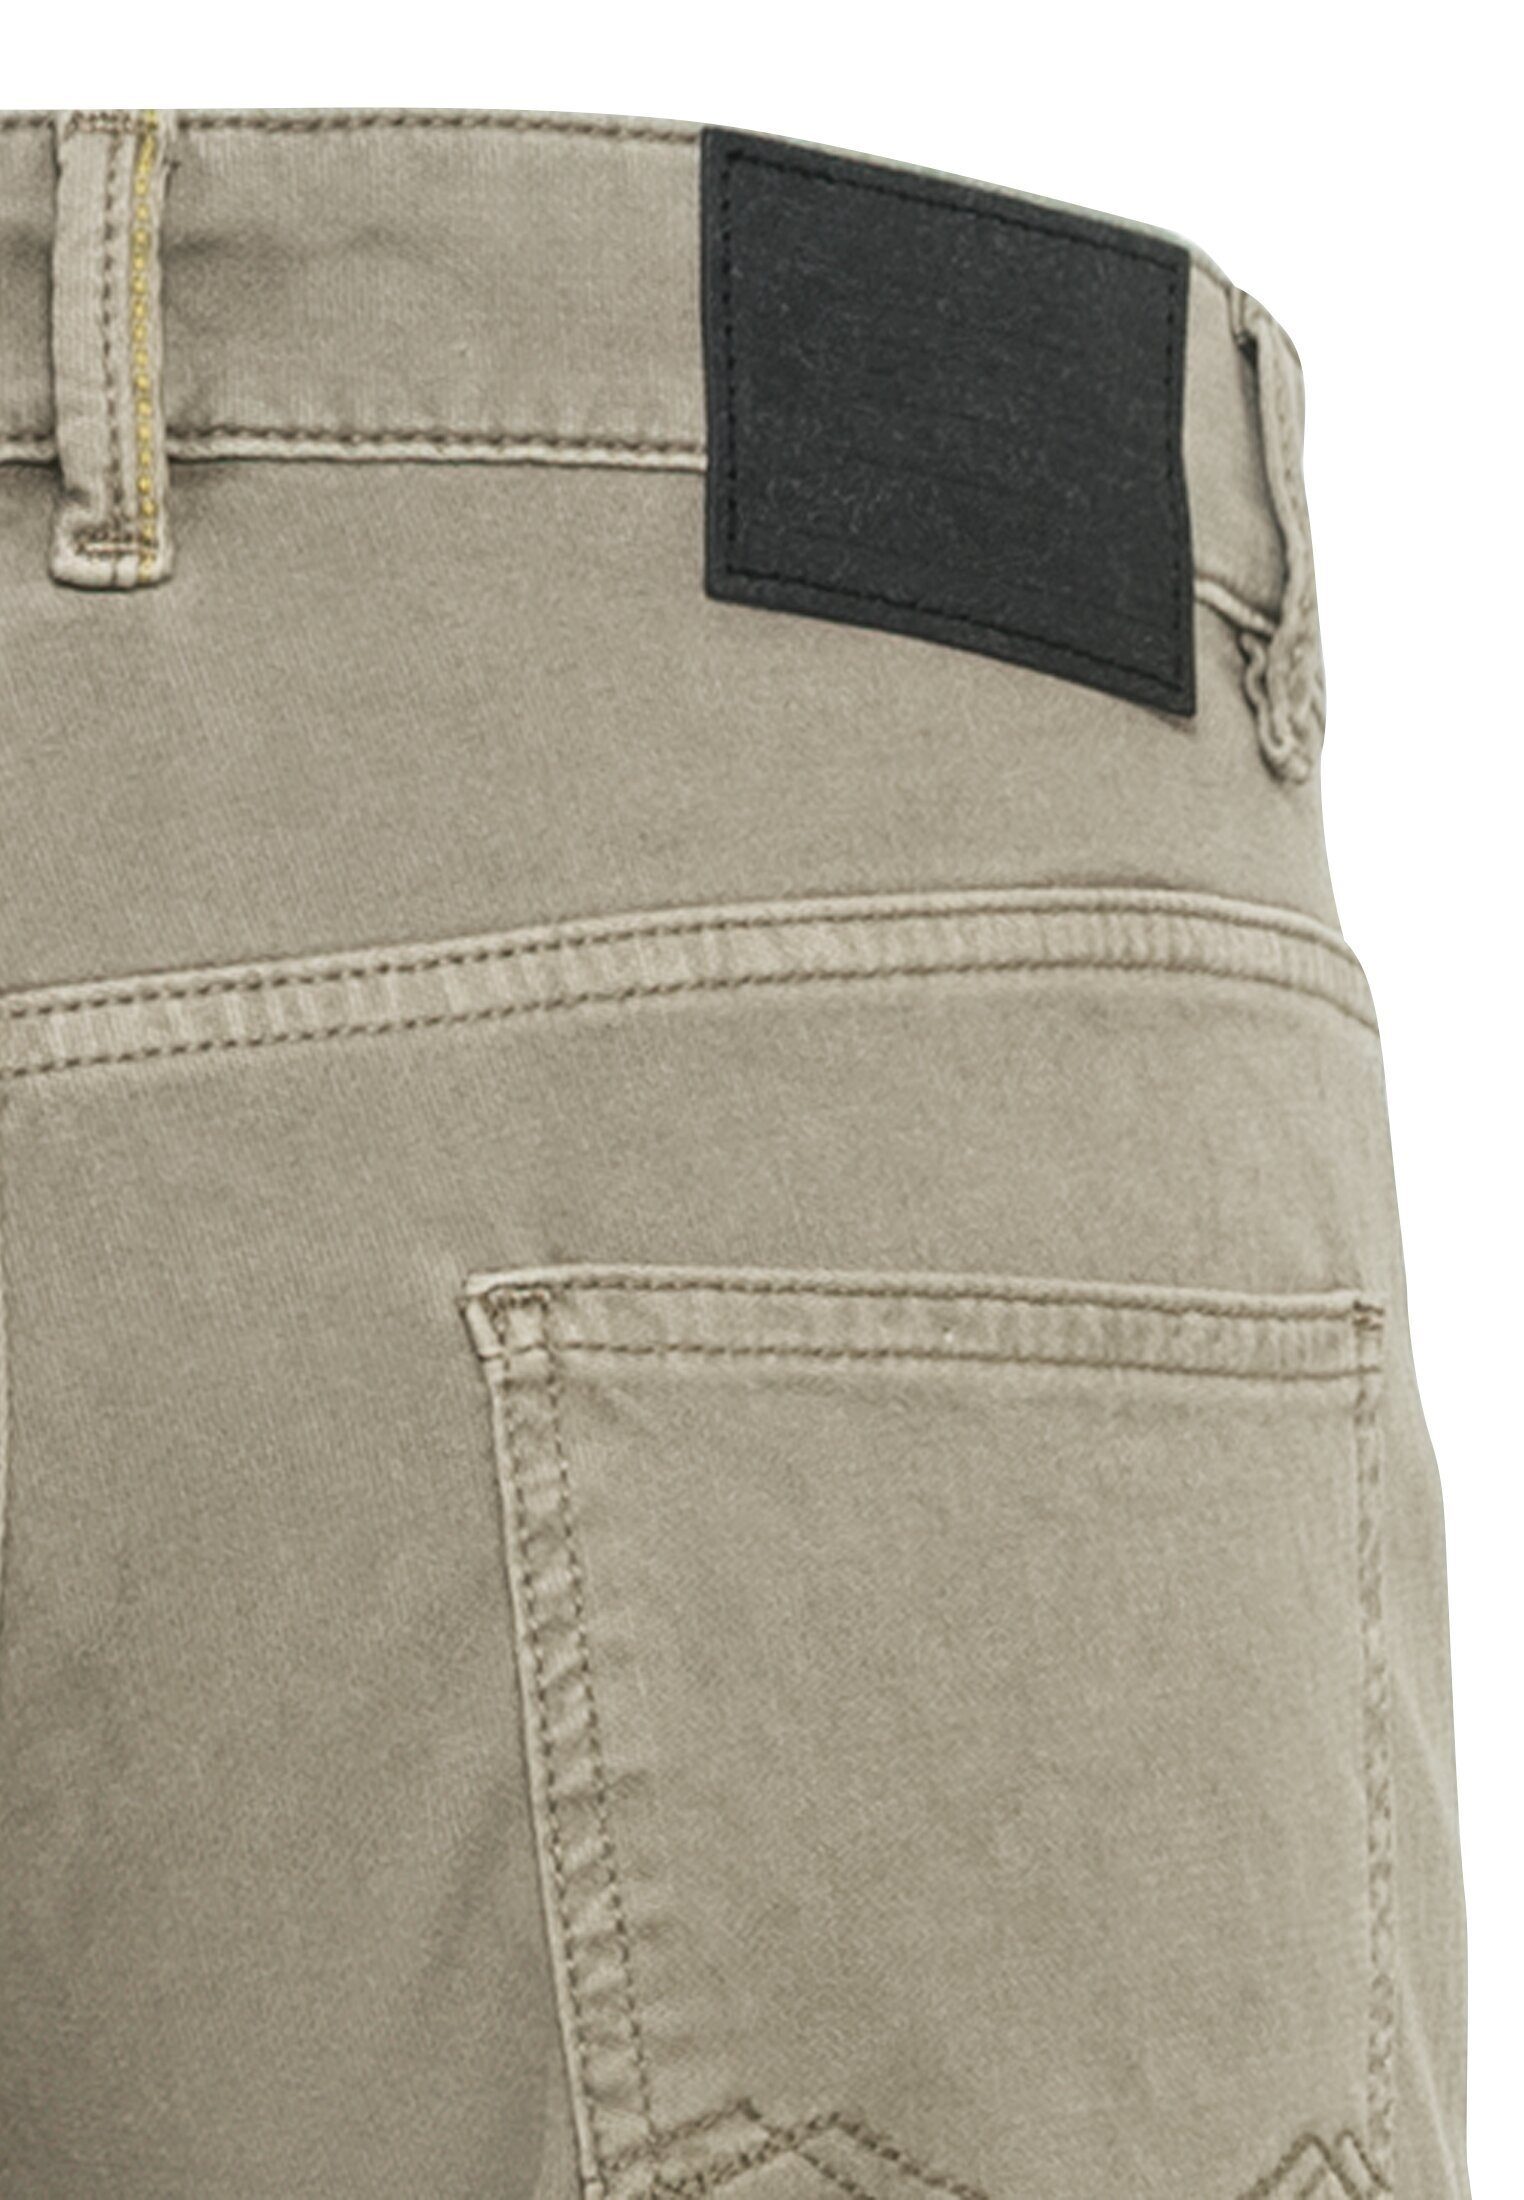 Khaki Hose 5-Pocket-Jeans Relaxed Fit active 5-Pocket camel